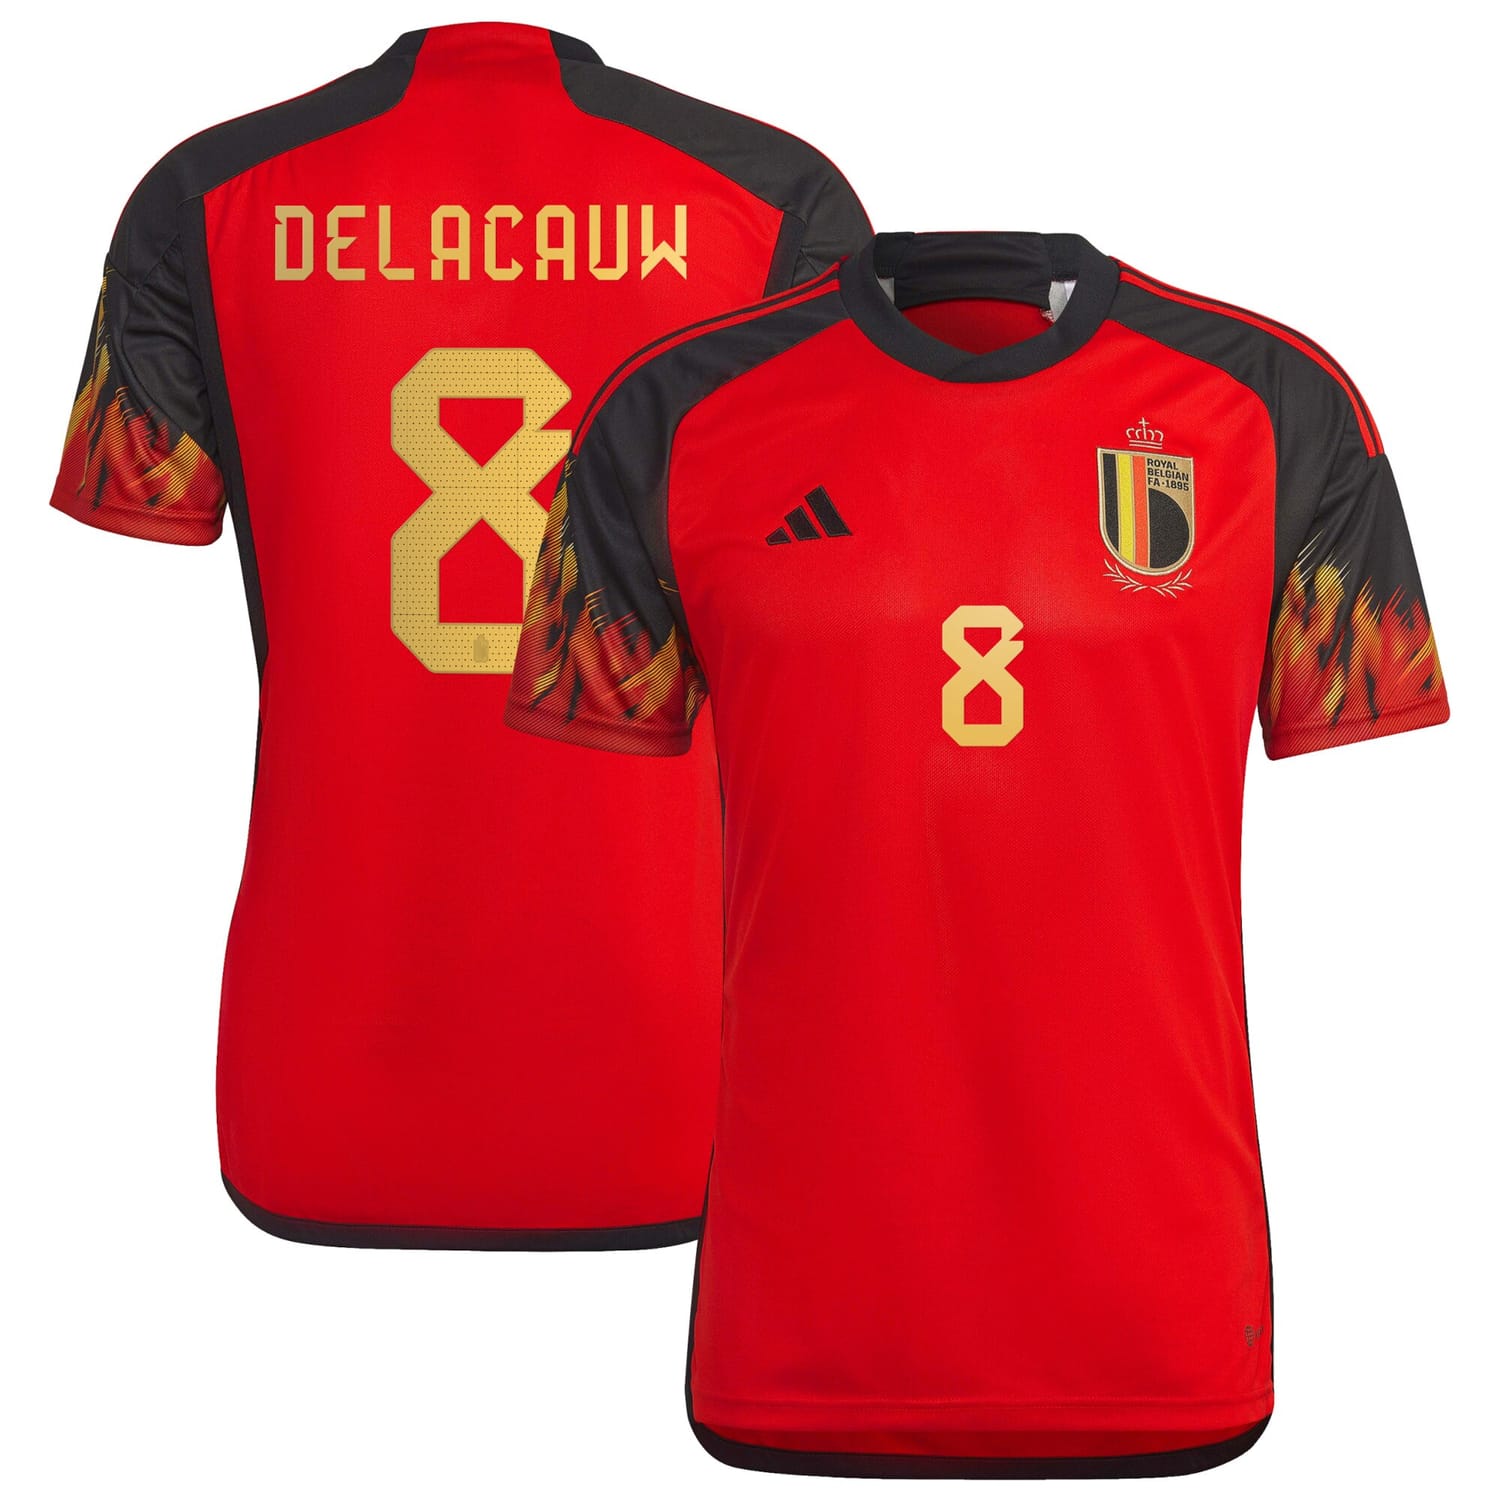 Belgium National Team Home Jersey Shirt 2022 player Féli Delacauw 8 printing for Men